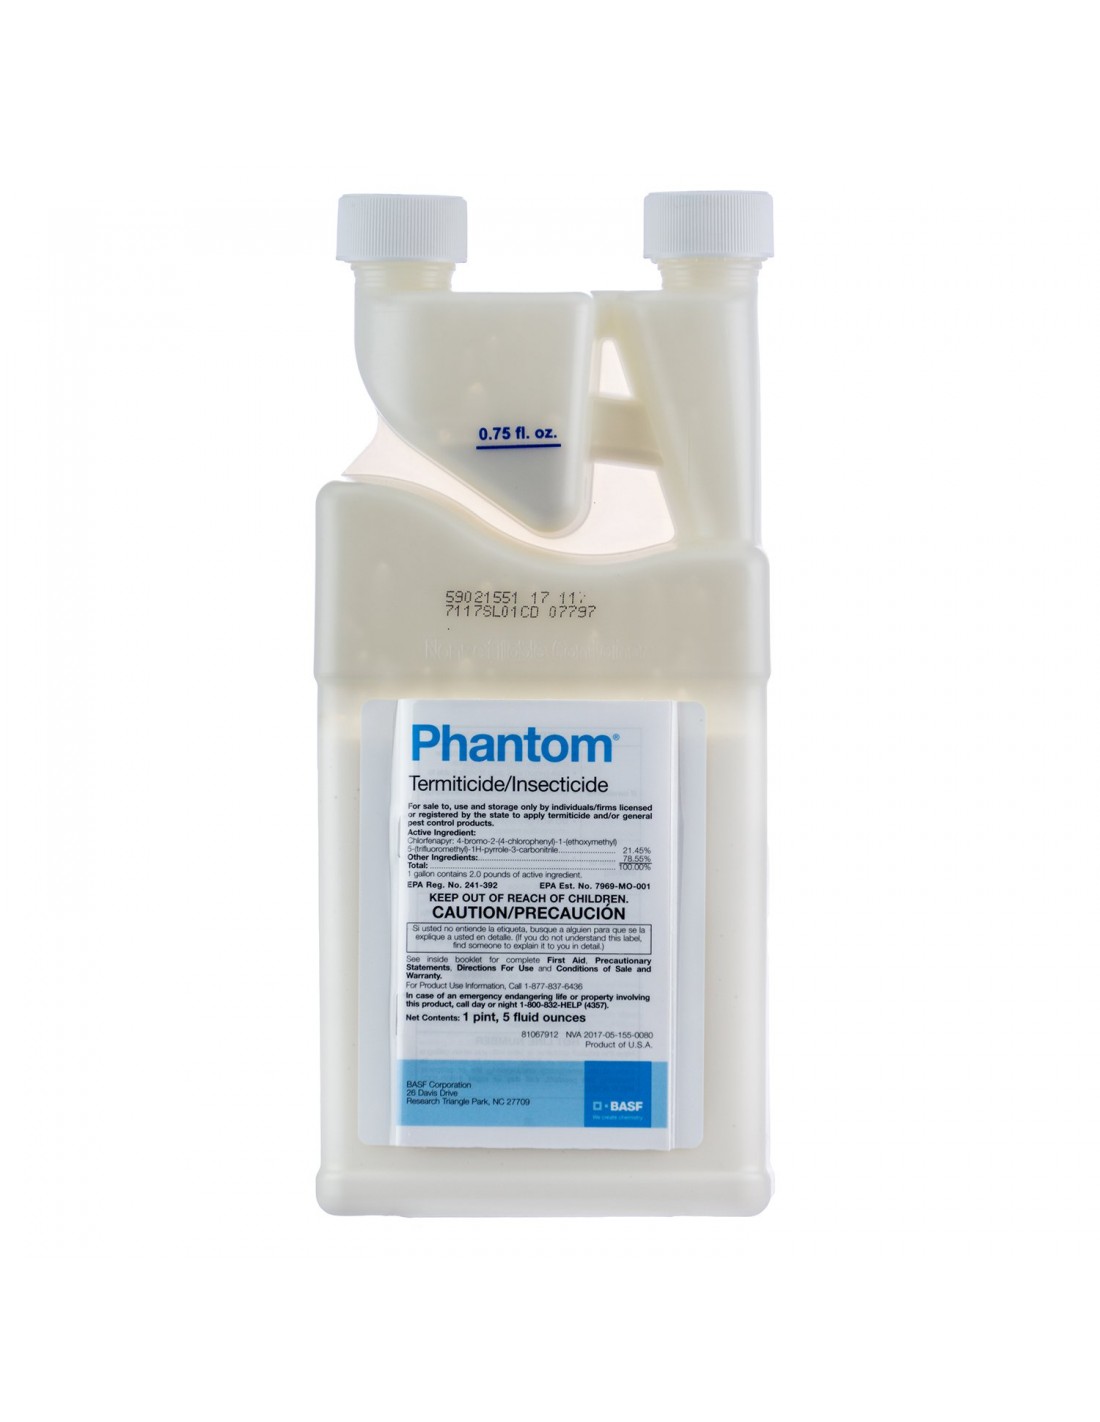 how long is Phanom effective?